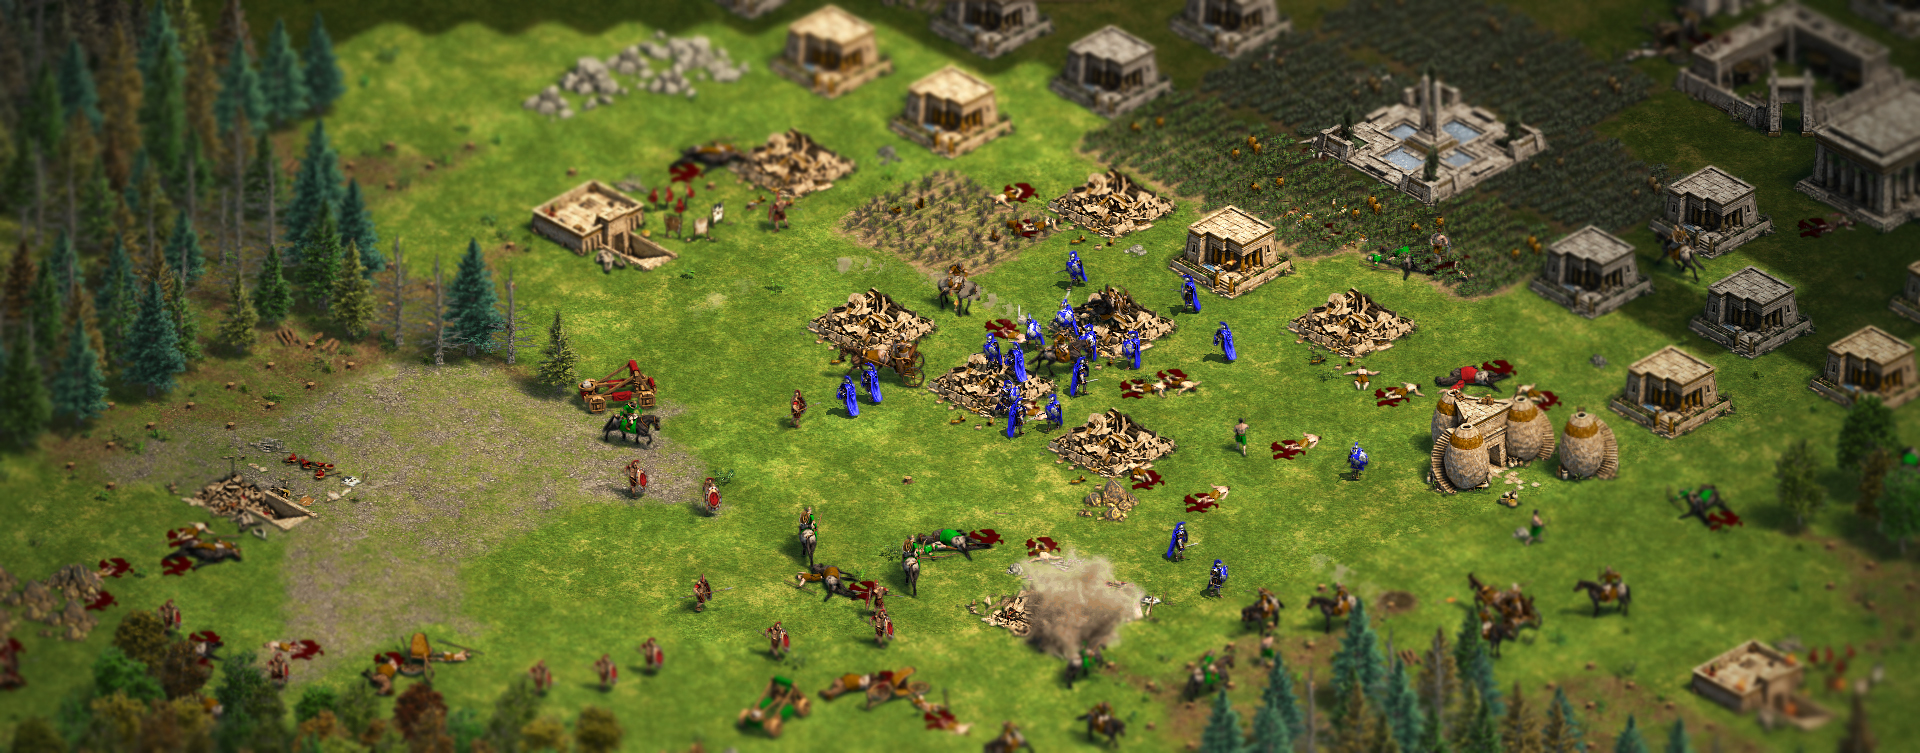 Age of Empires  Definitive Edition Screenshot 2018.03.26 - 18.09.jpg